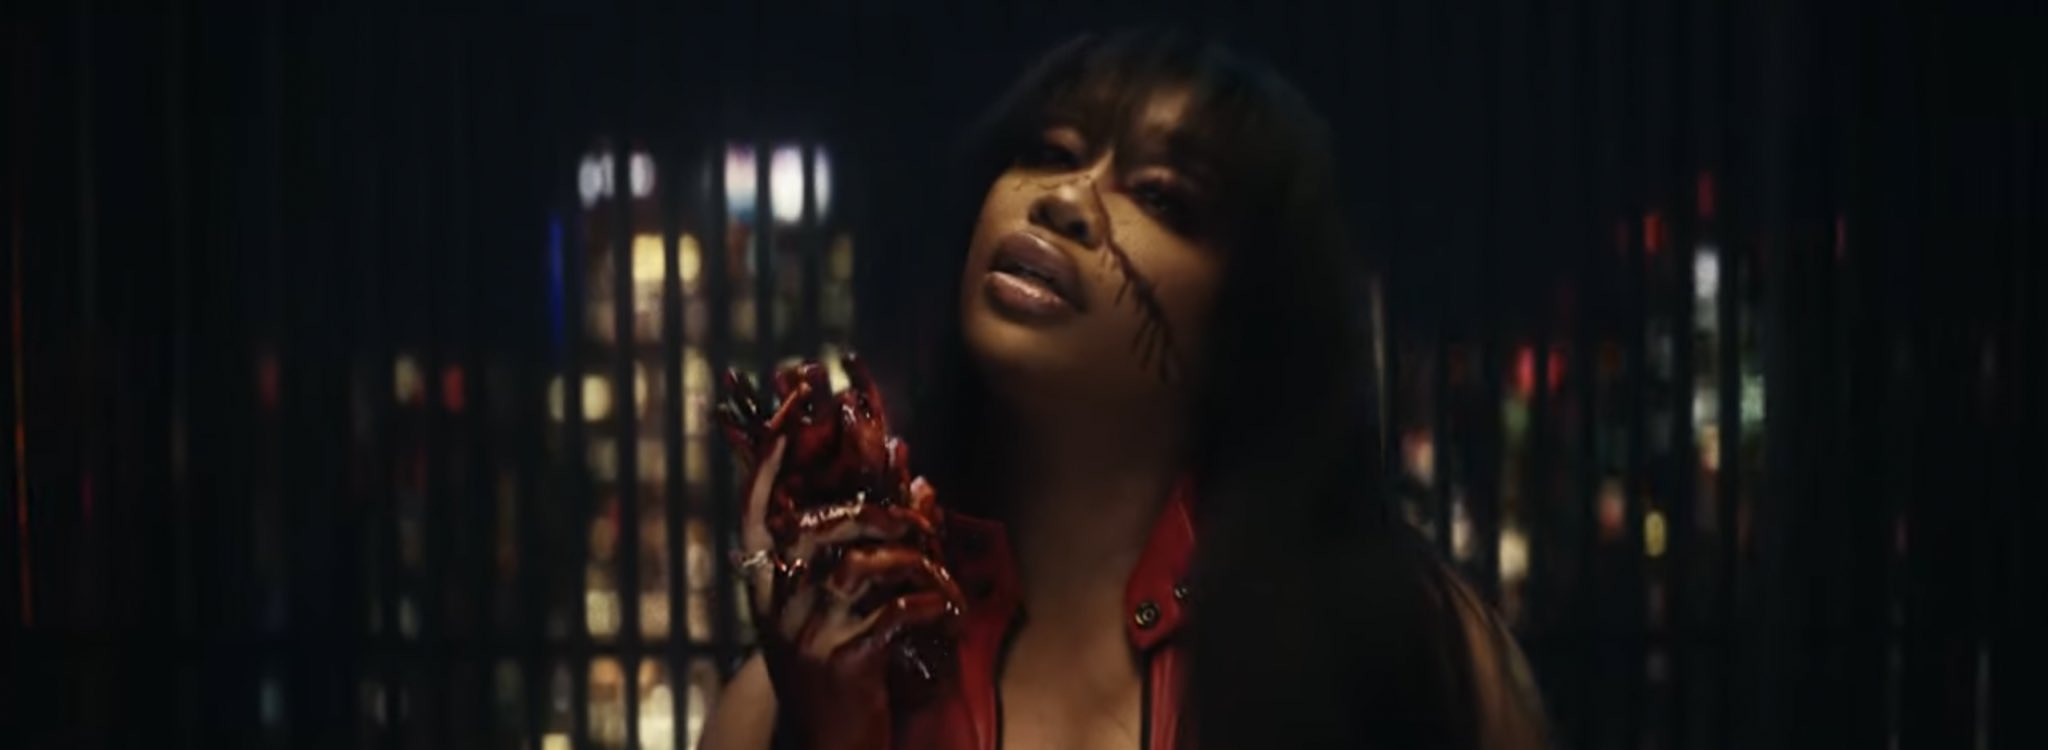 SZA released a new music video, 'Kill Bill,' featuring Vivica A. Fox